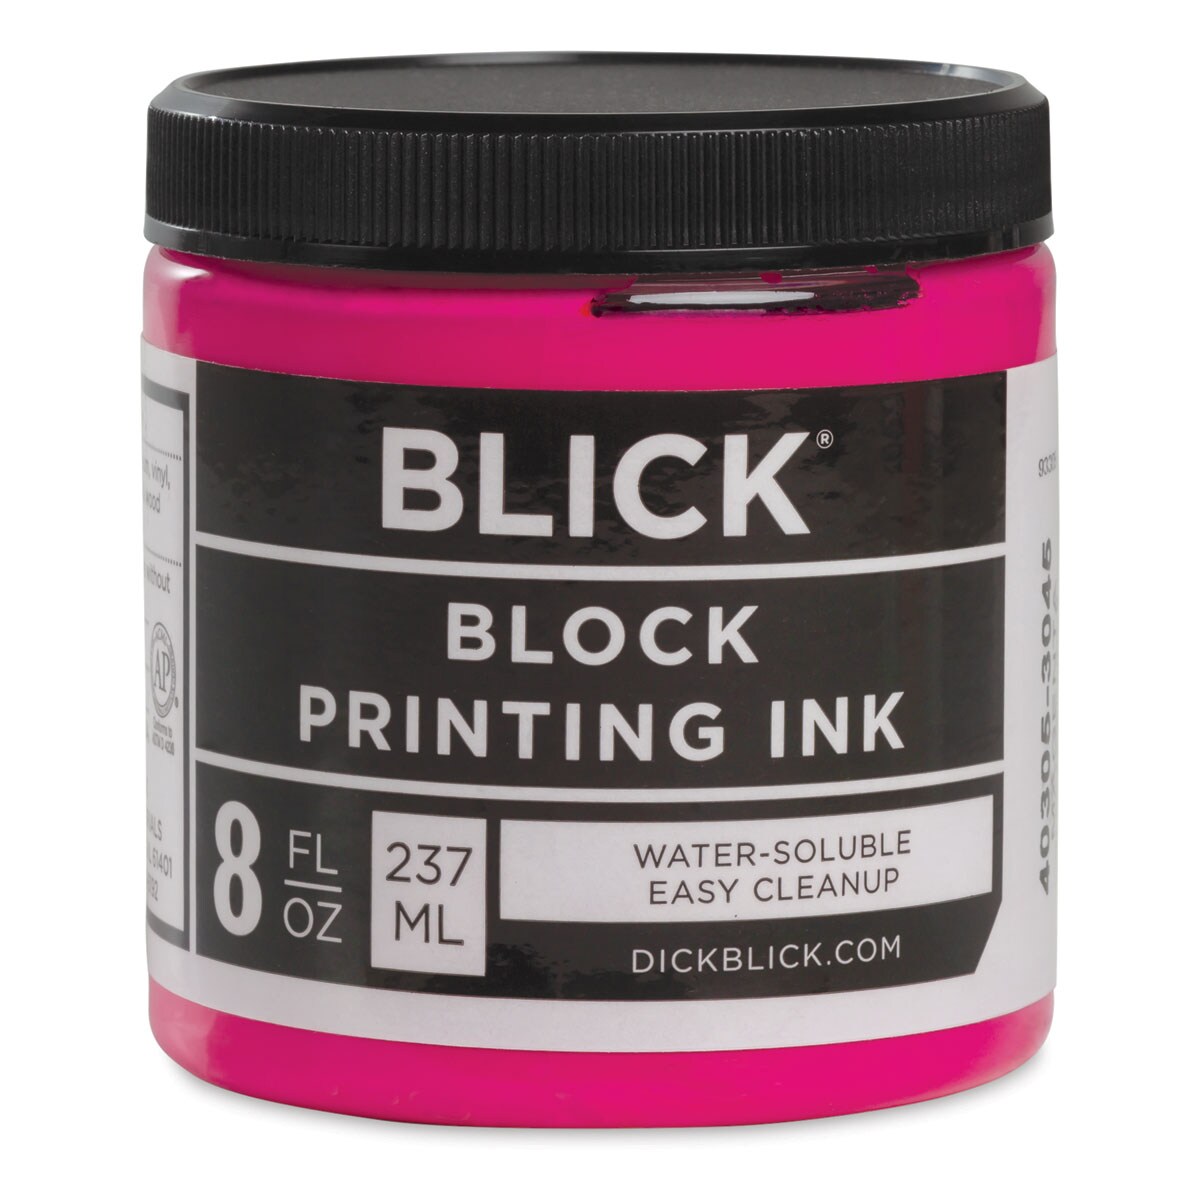 Blick Water-Soluble Block Printing Ink - Magenta, 8 oz Jar